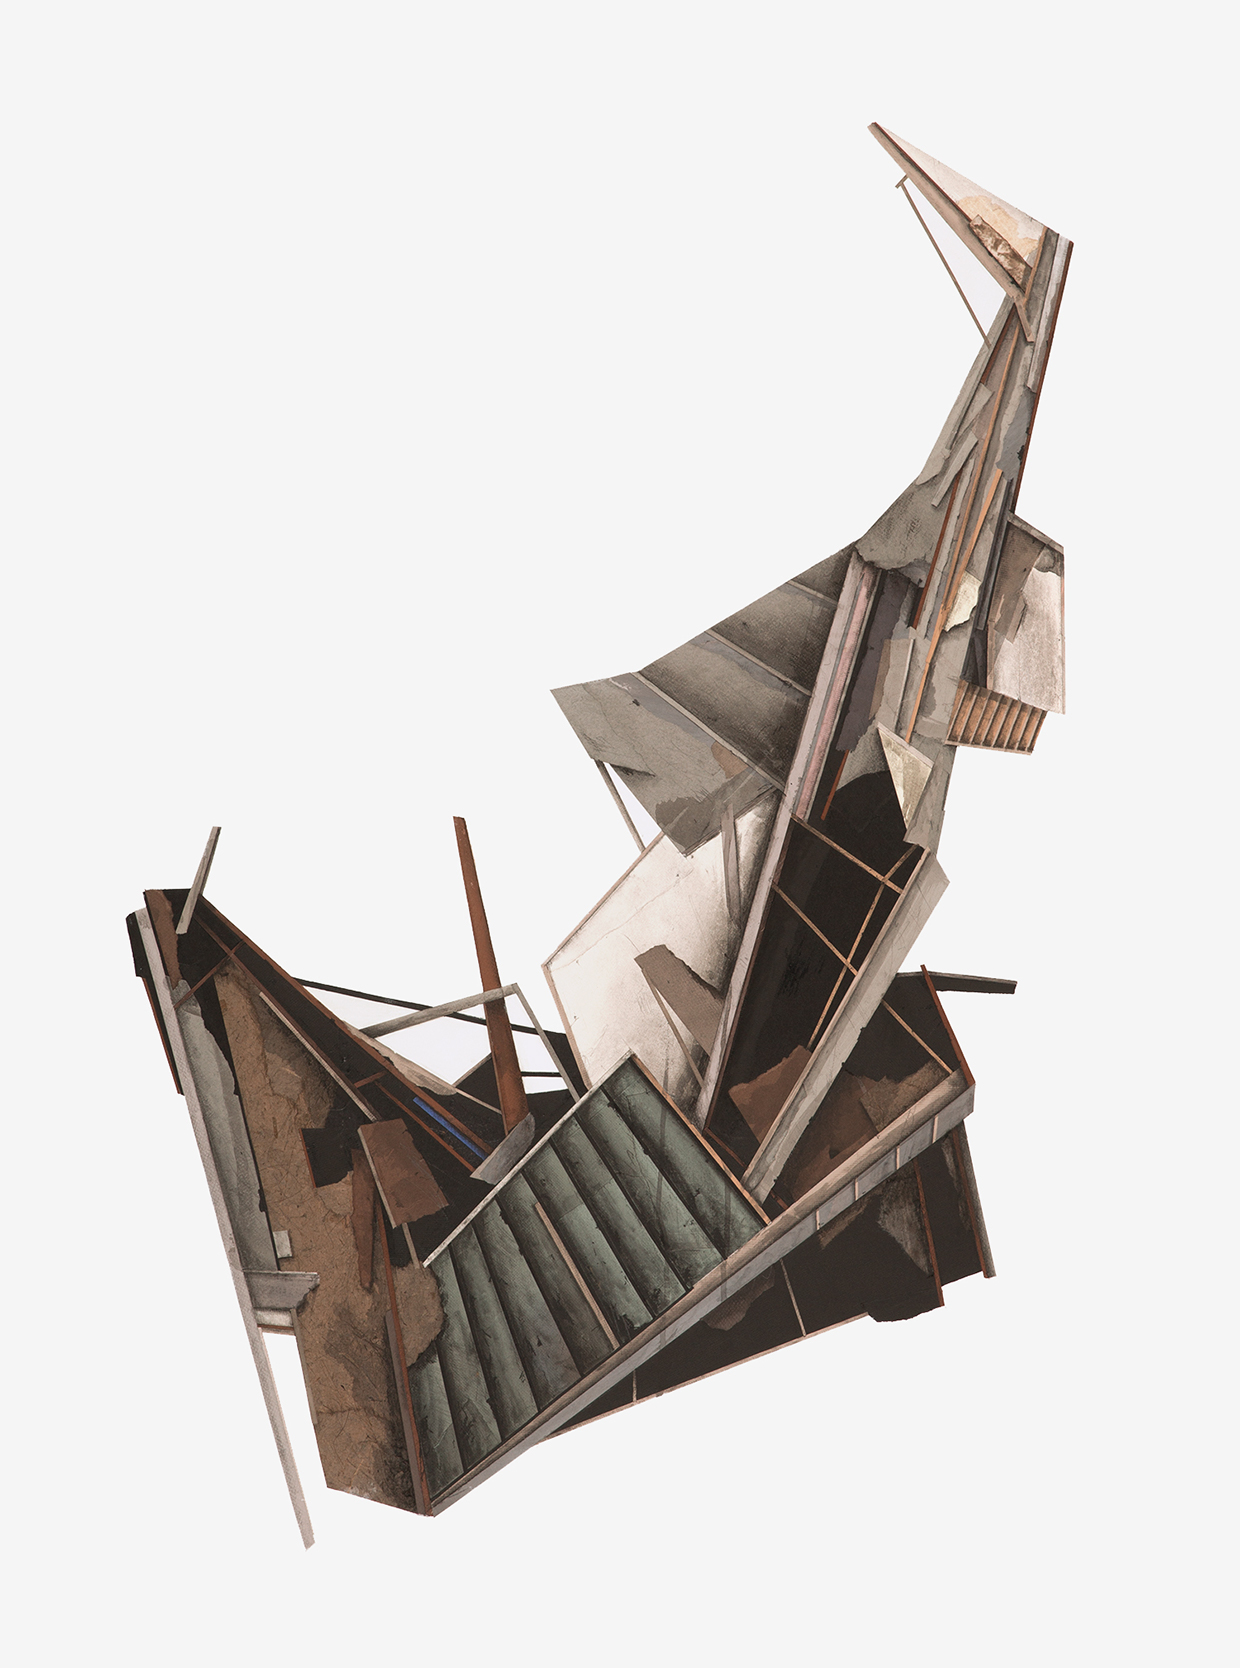 Collapsing Architecture / Seth Clark (17)